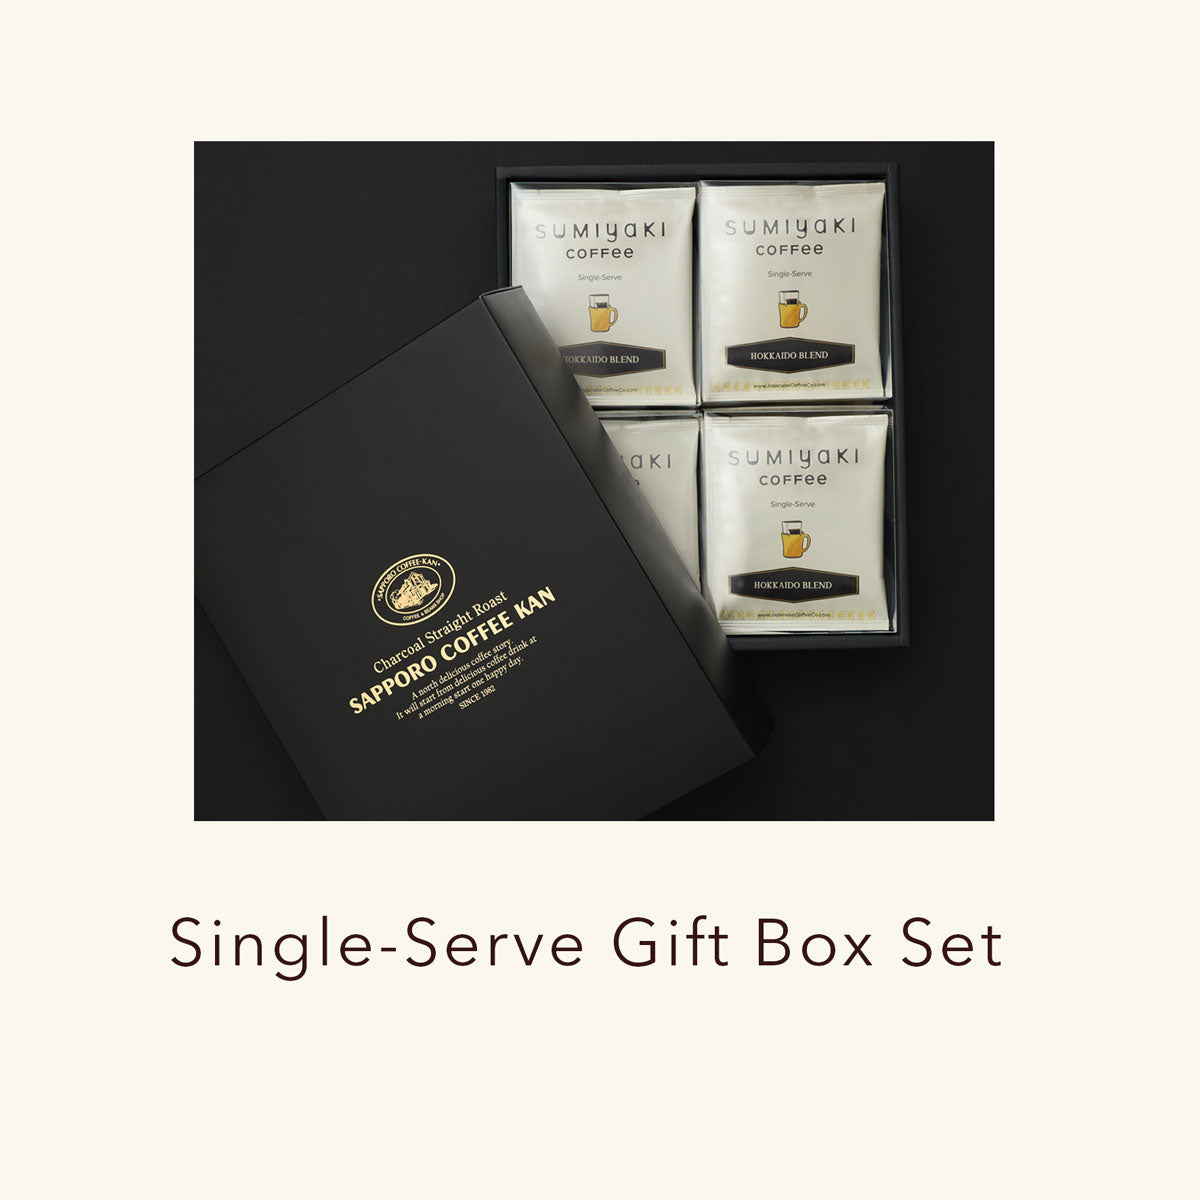 Buy Single-Serve Gift Box Set of Premium Sumiyaki Japanese Coffee